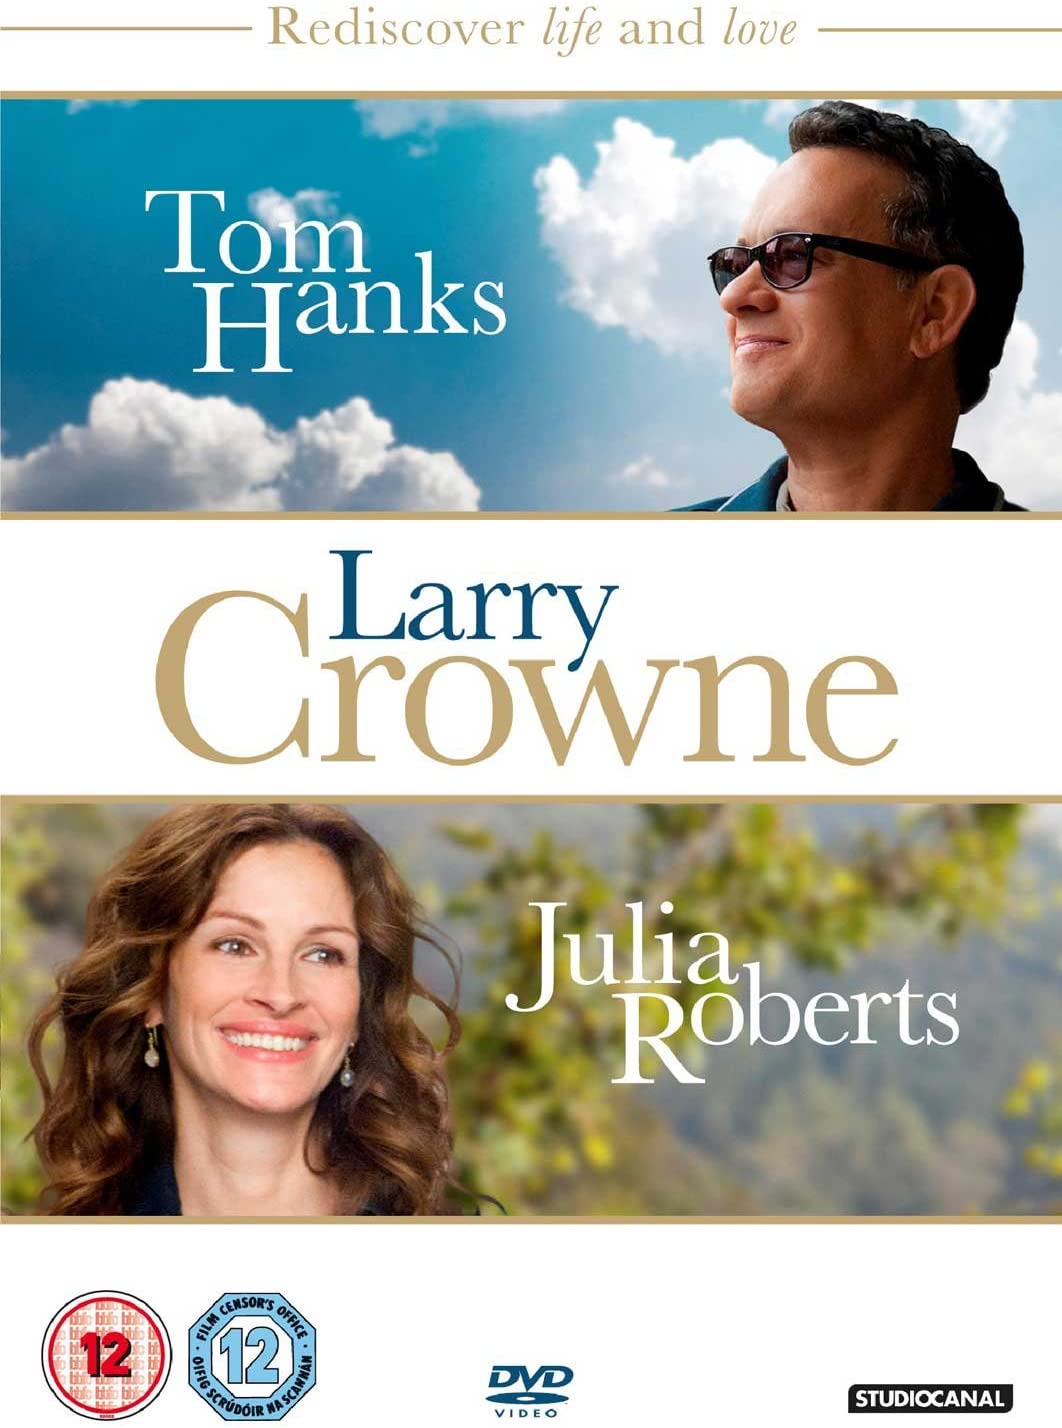 Larry Crowne - Romance [DVD]